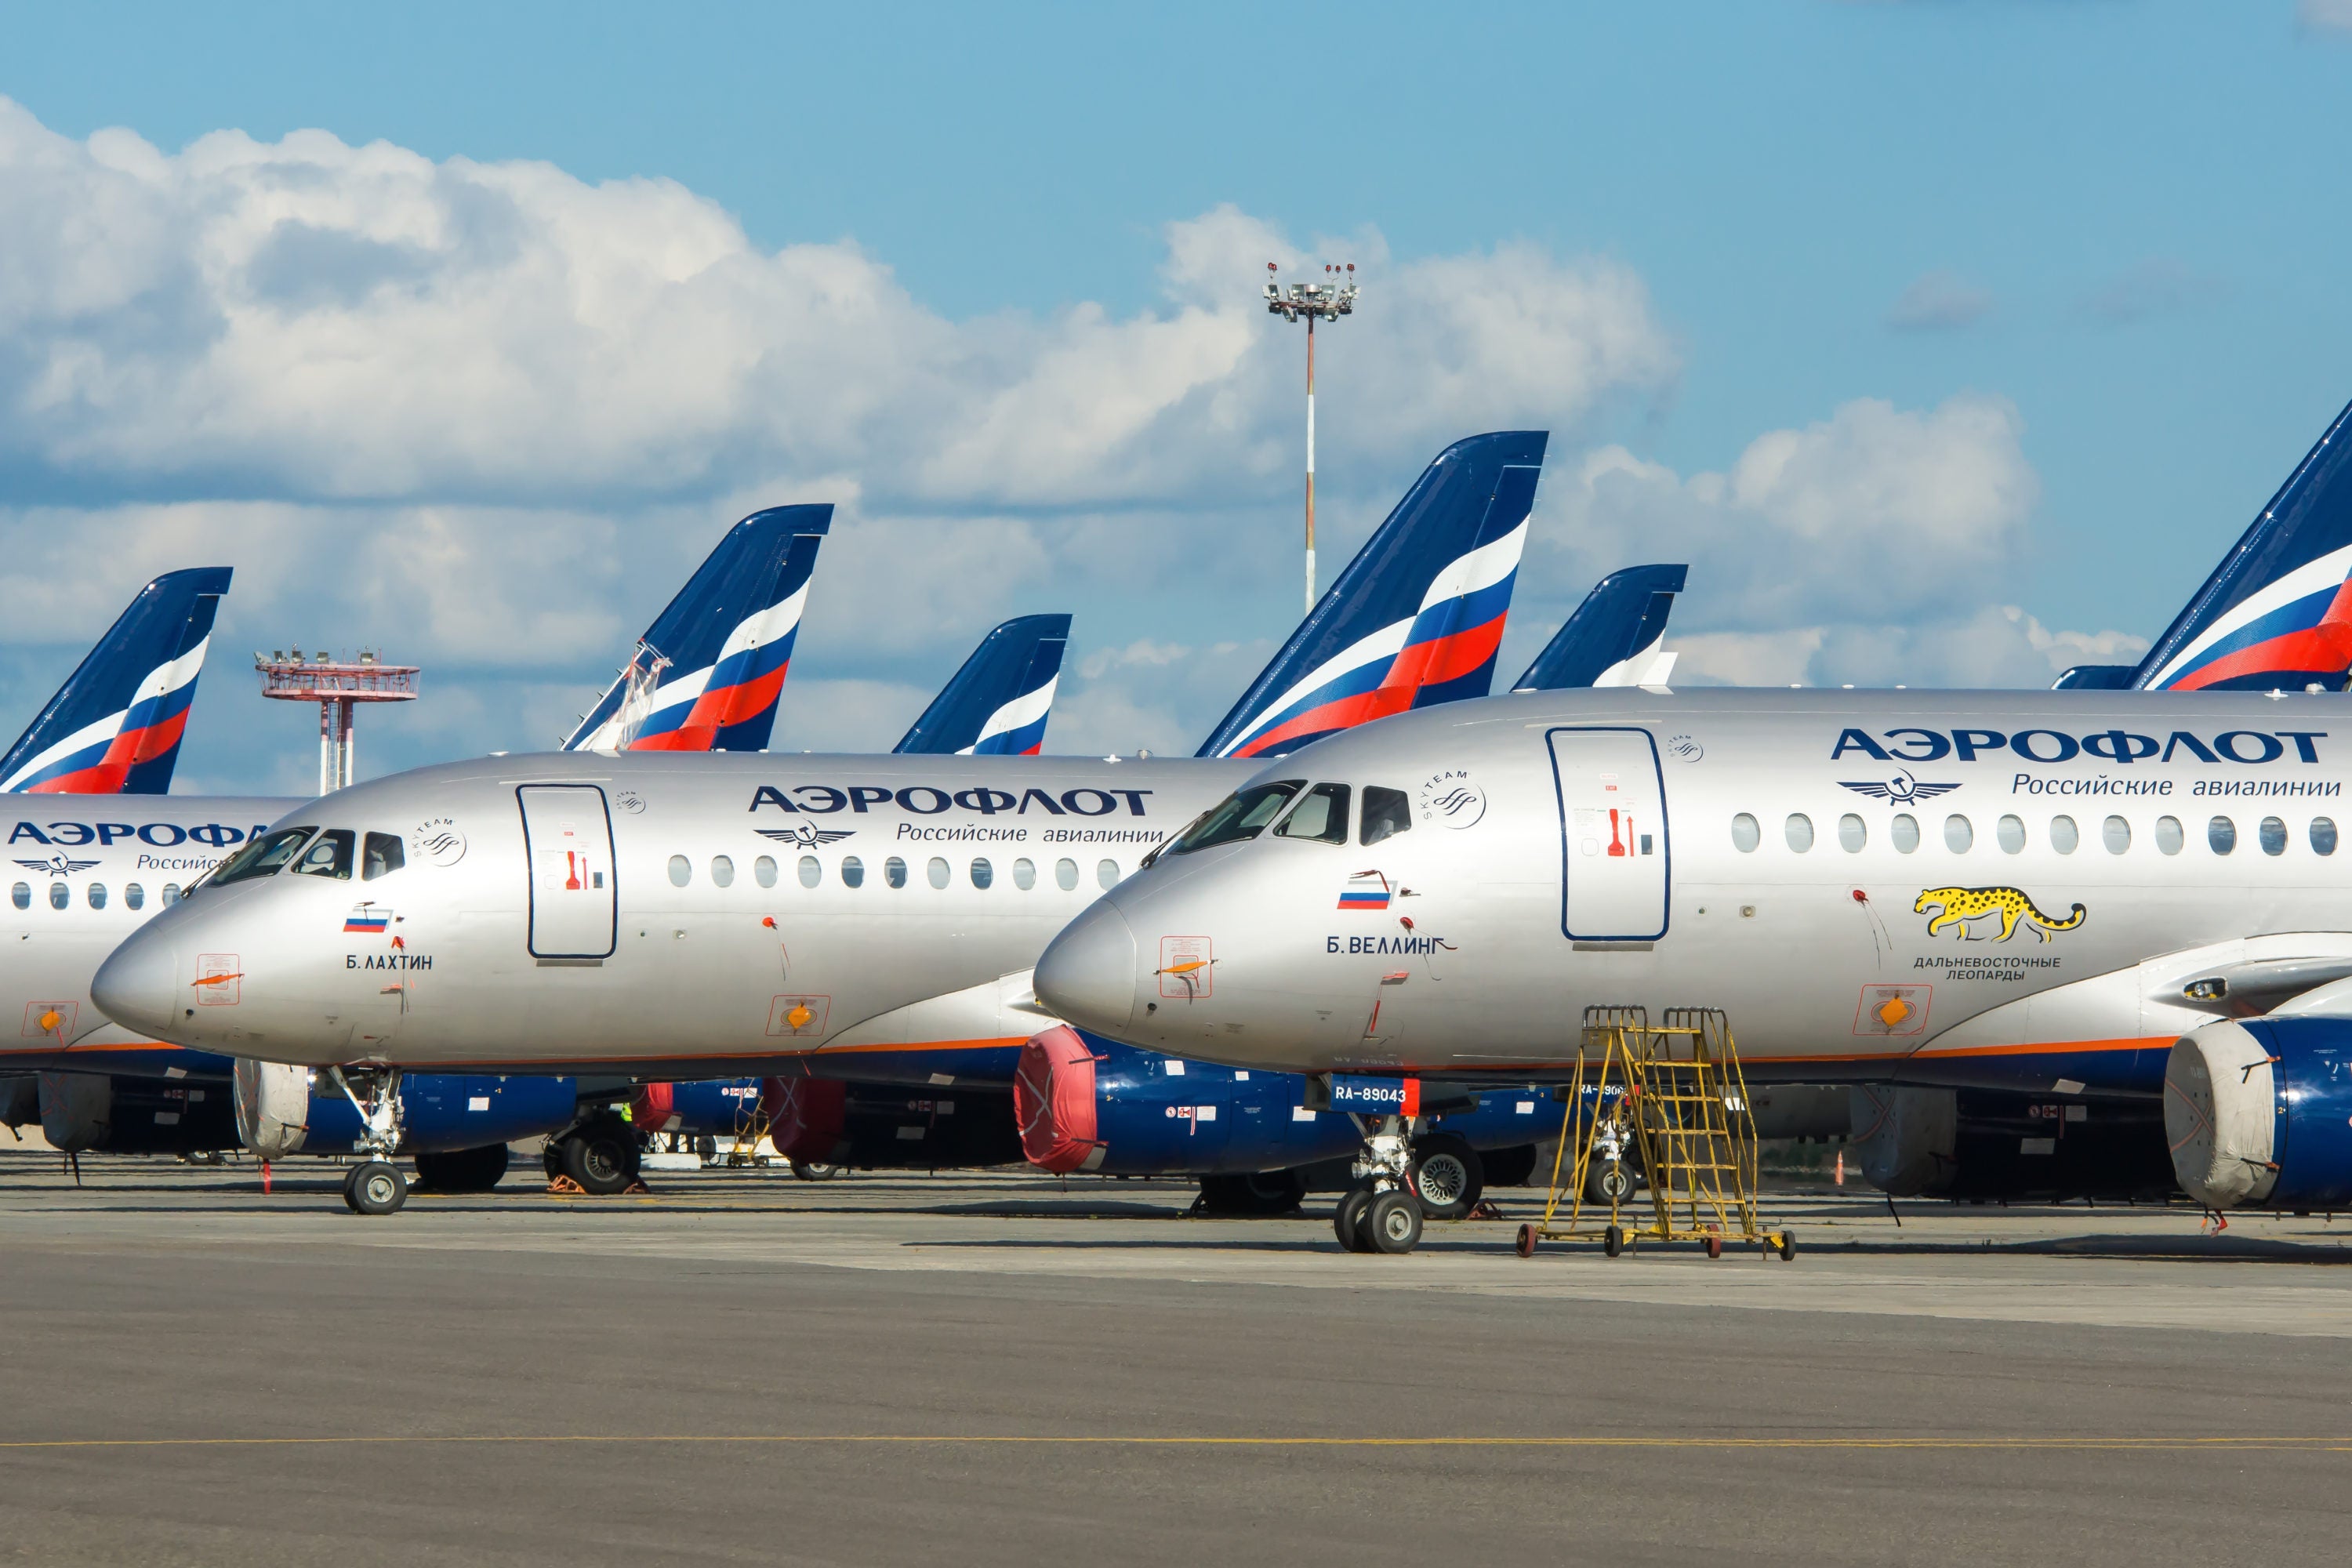 Aeroflot planes